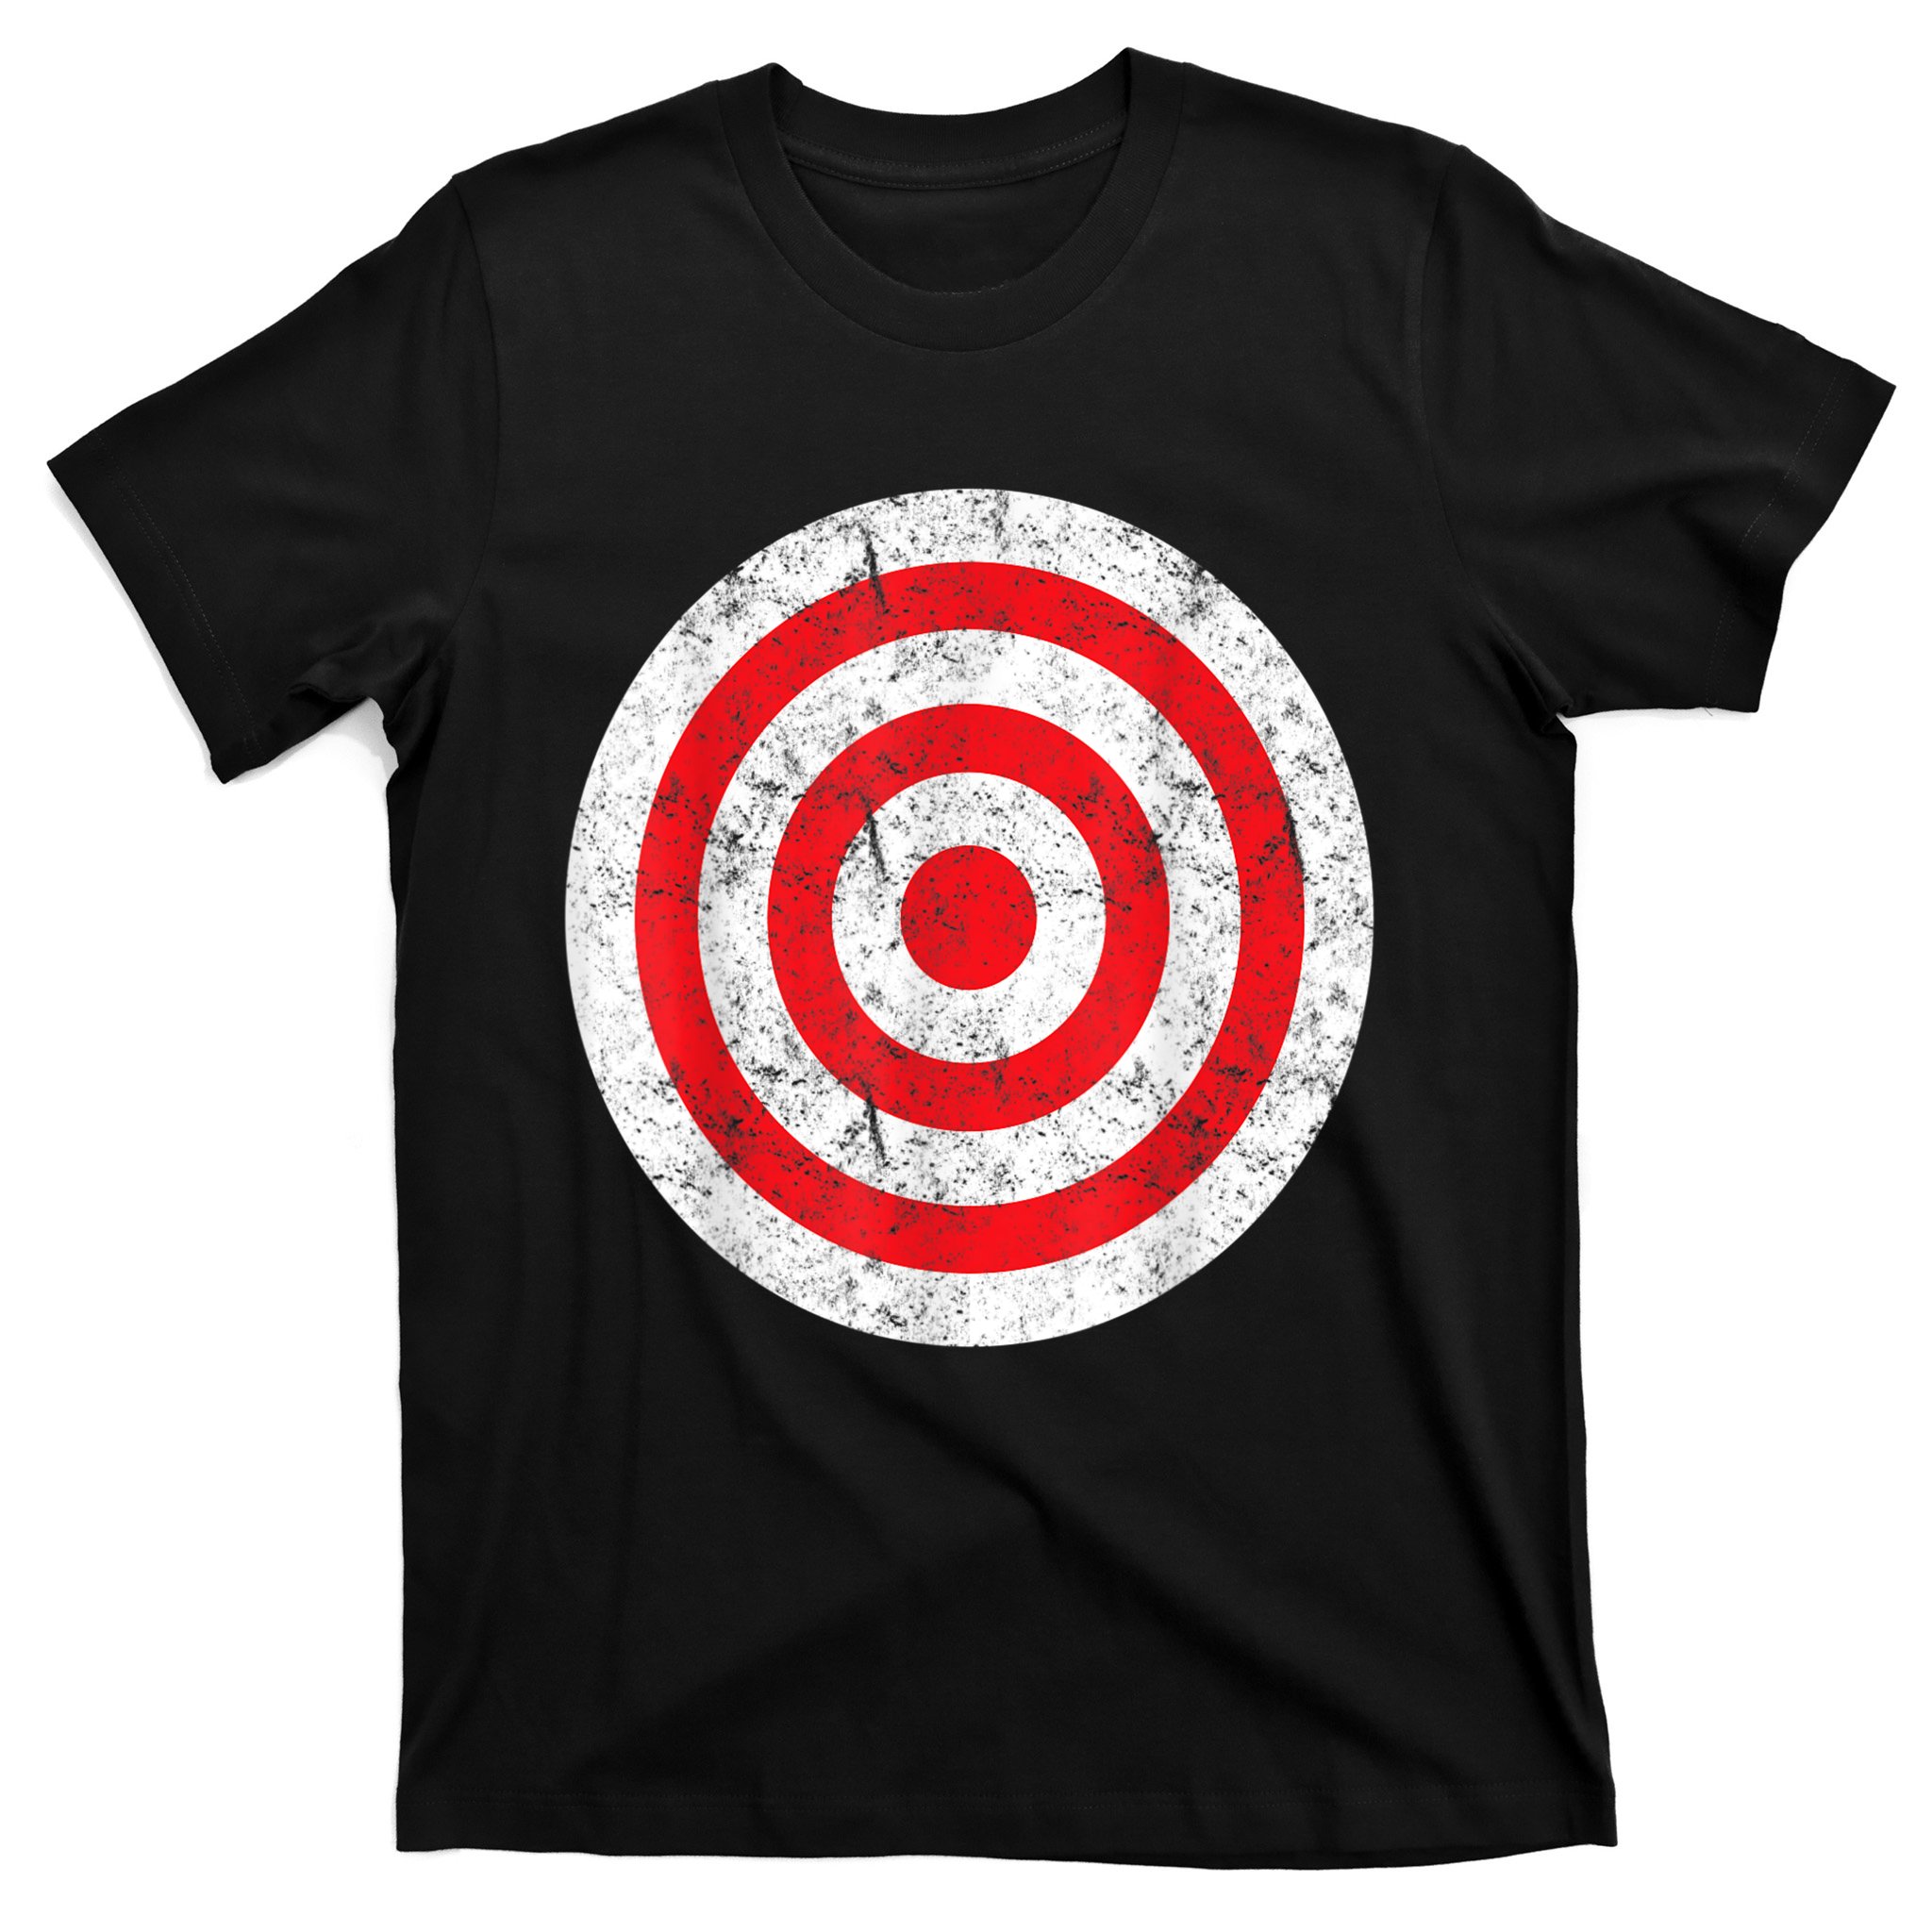 Print on Back) Funny Bullseye Target Bulls Eye Joke T-Shirt Size S-5XL